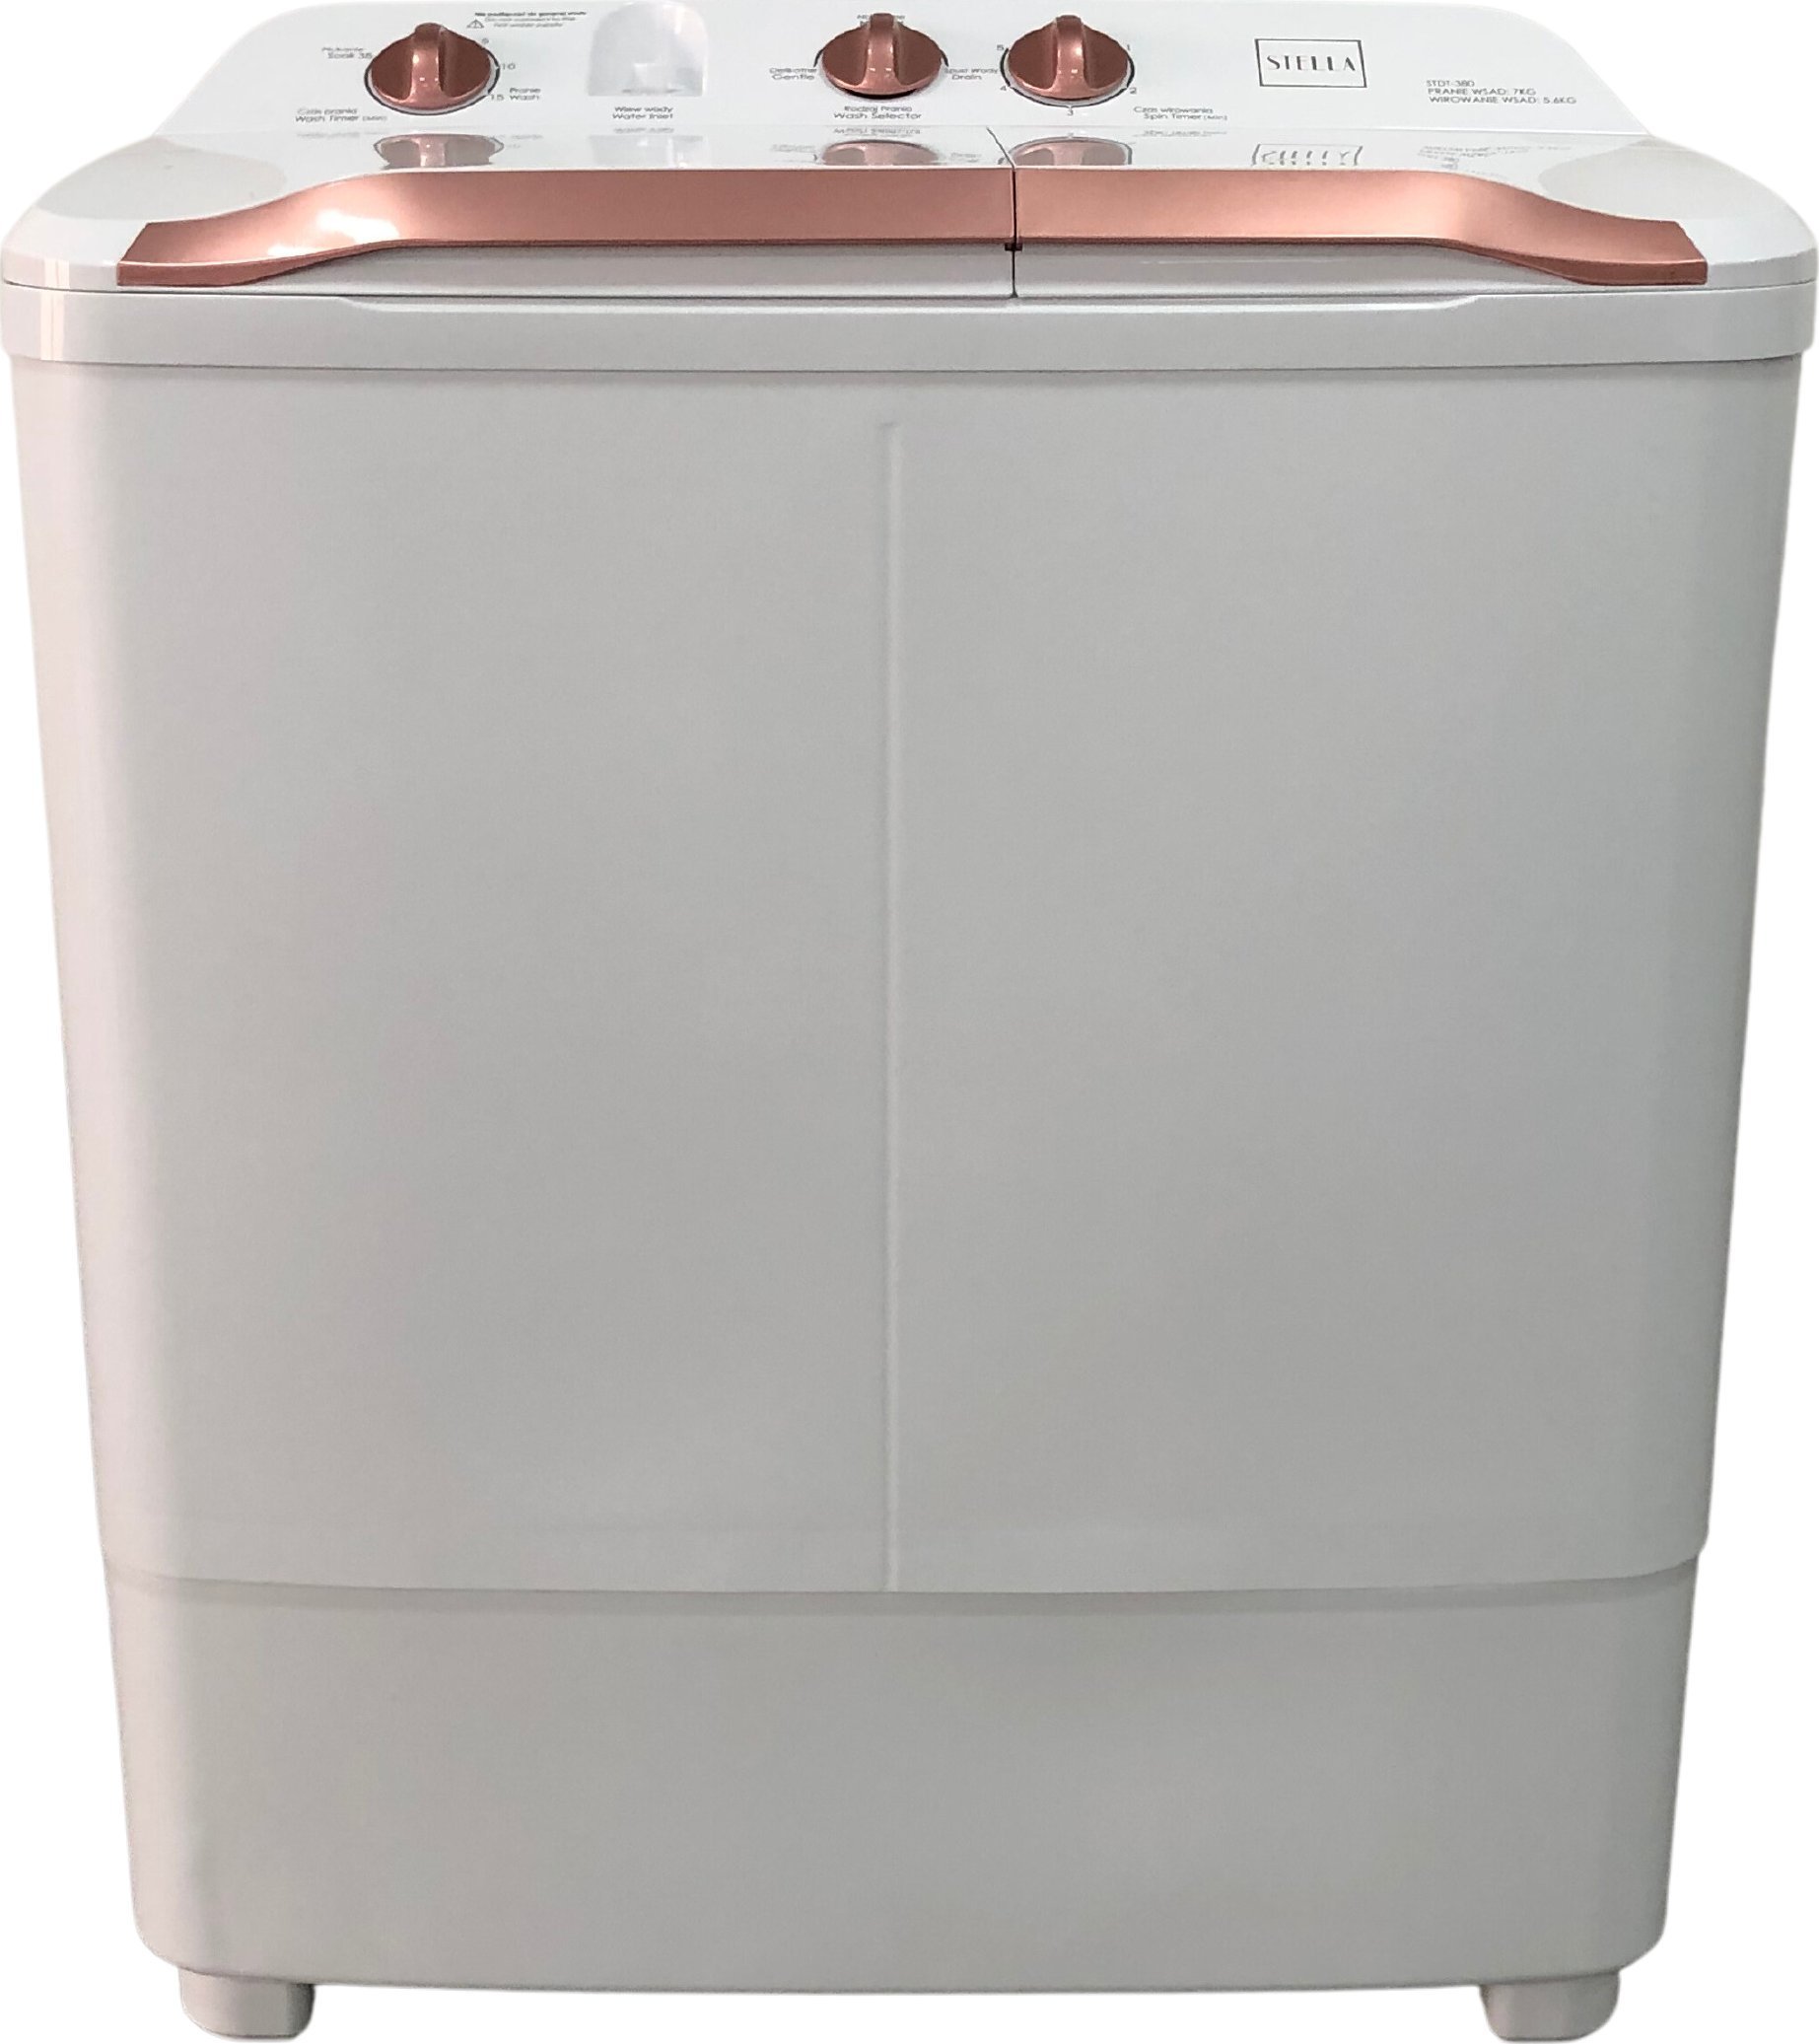 Masini de spalat rufe - Masina de spalat rufe  STELLA STDT-380,
Alb, aur roz,7 kg